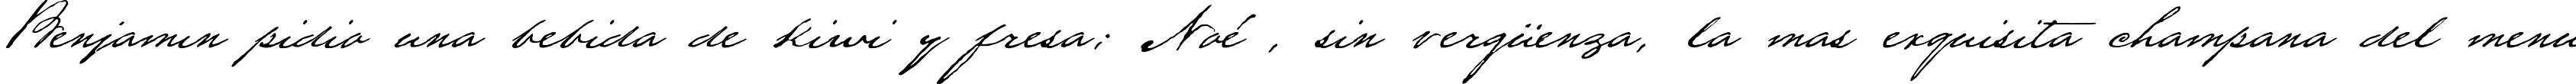 Пример написания шрифтом HoustonPen текста на испанском